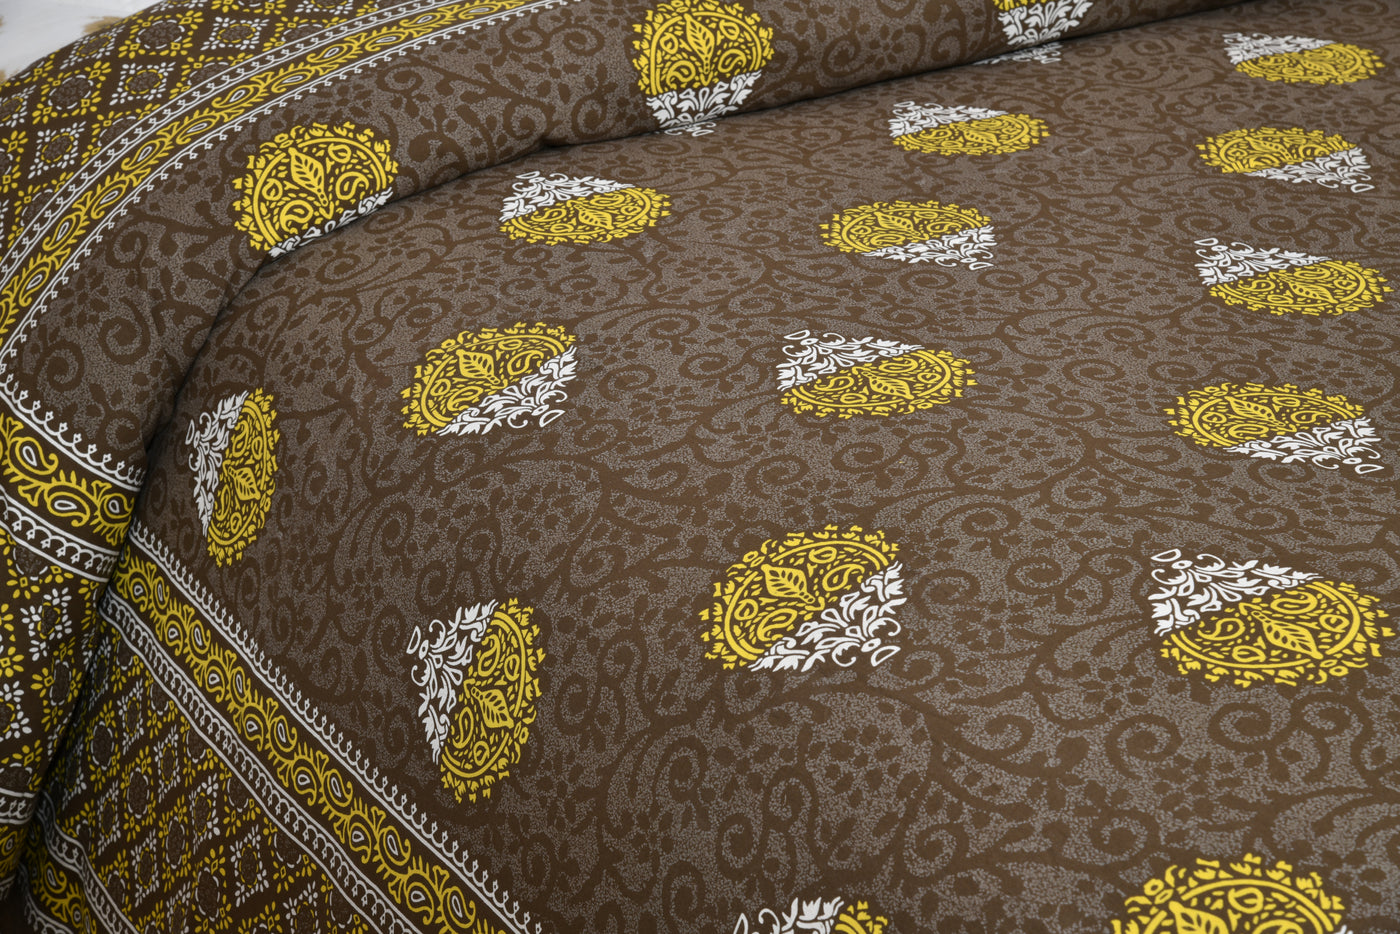 Brown color bedsheet with floral design